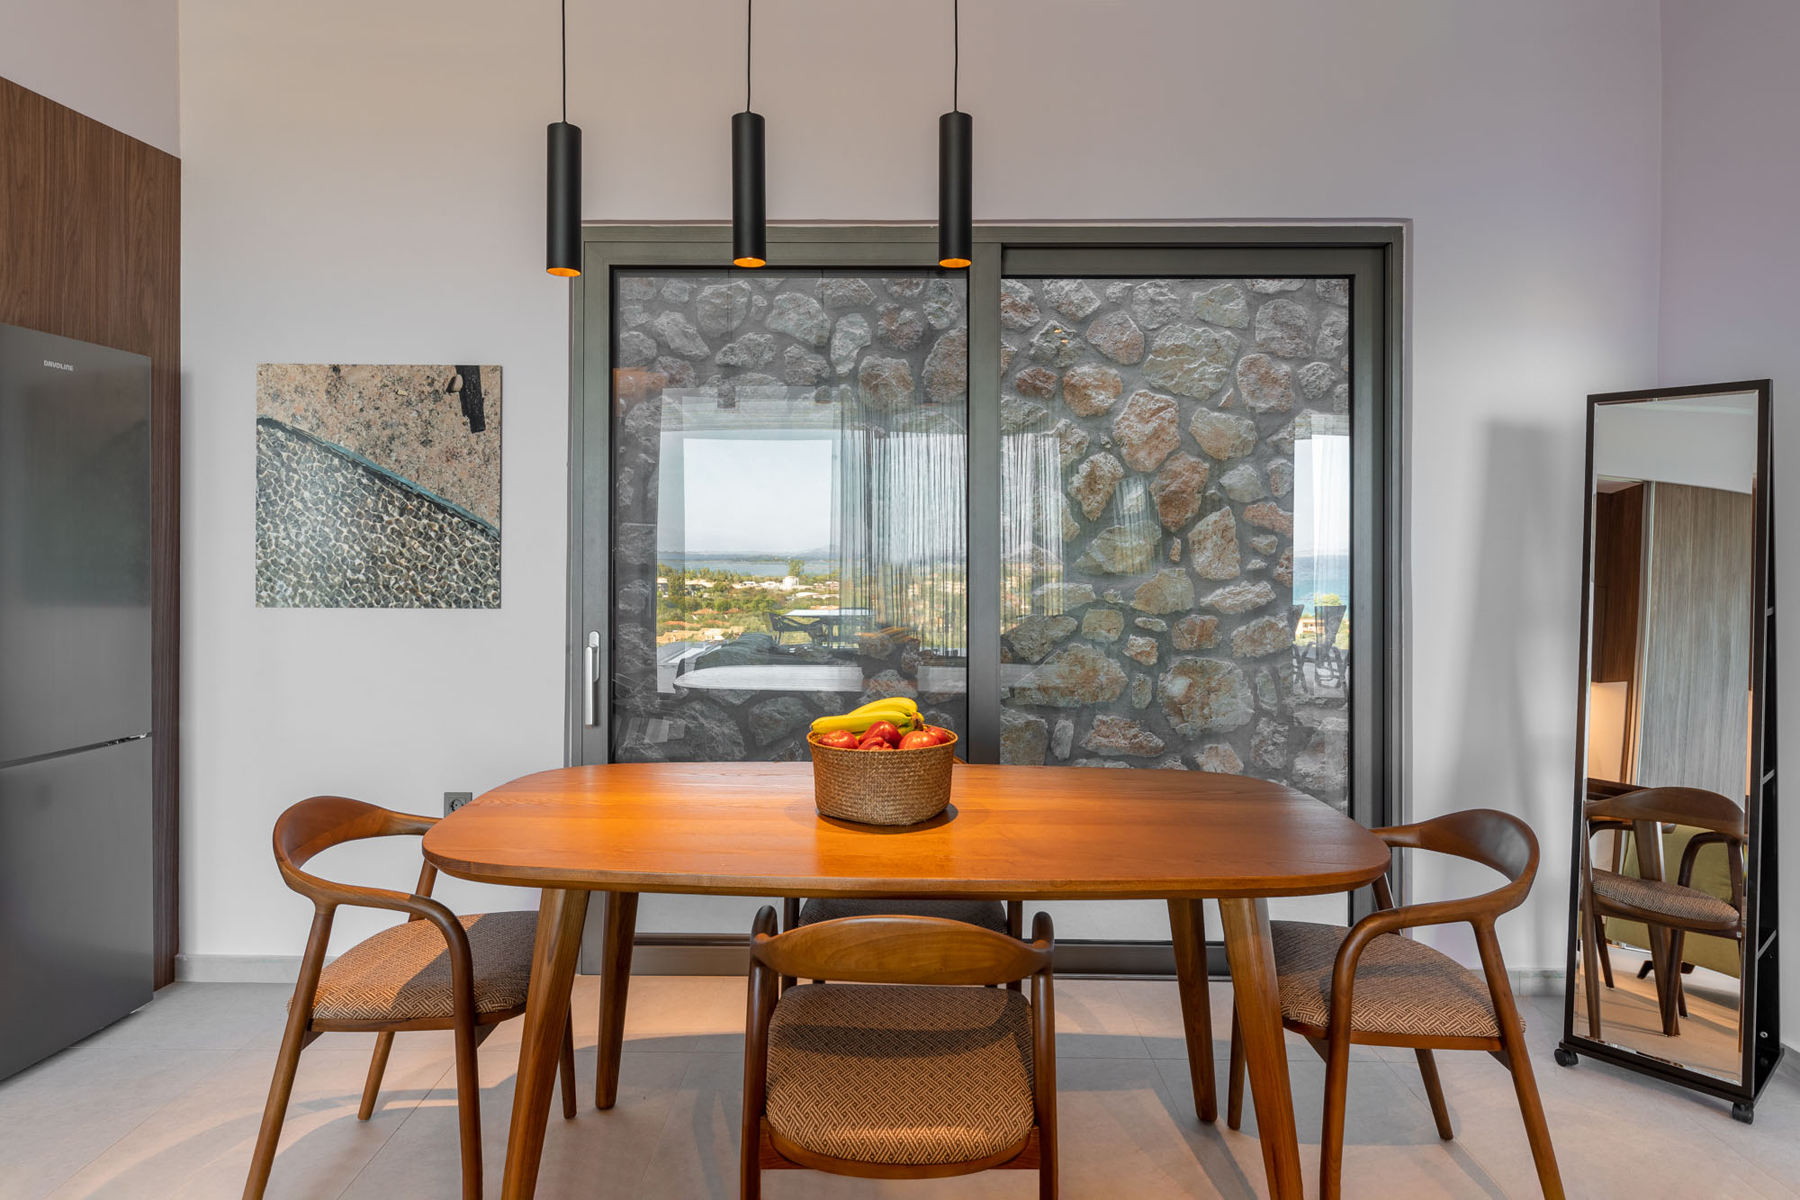 z luxury villa omega lefkada table chairs fruits mirror